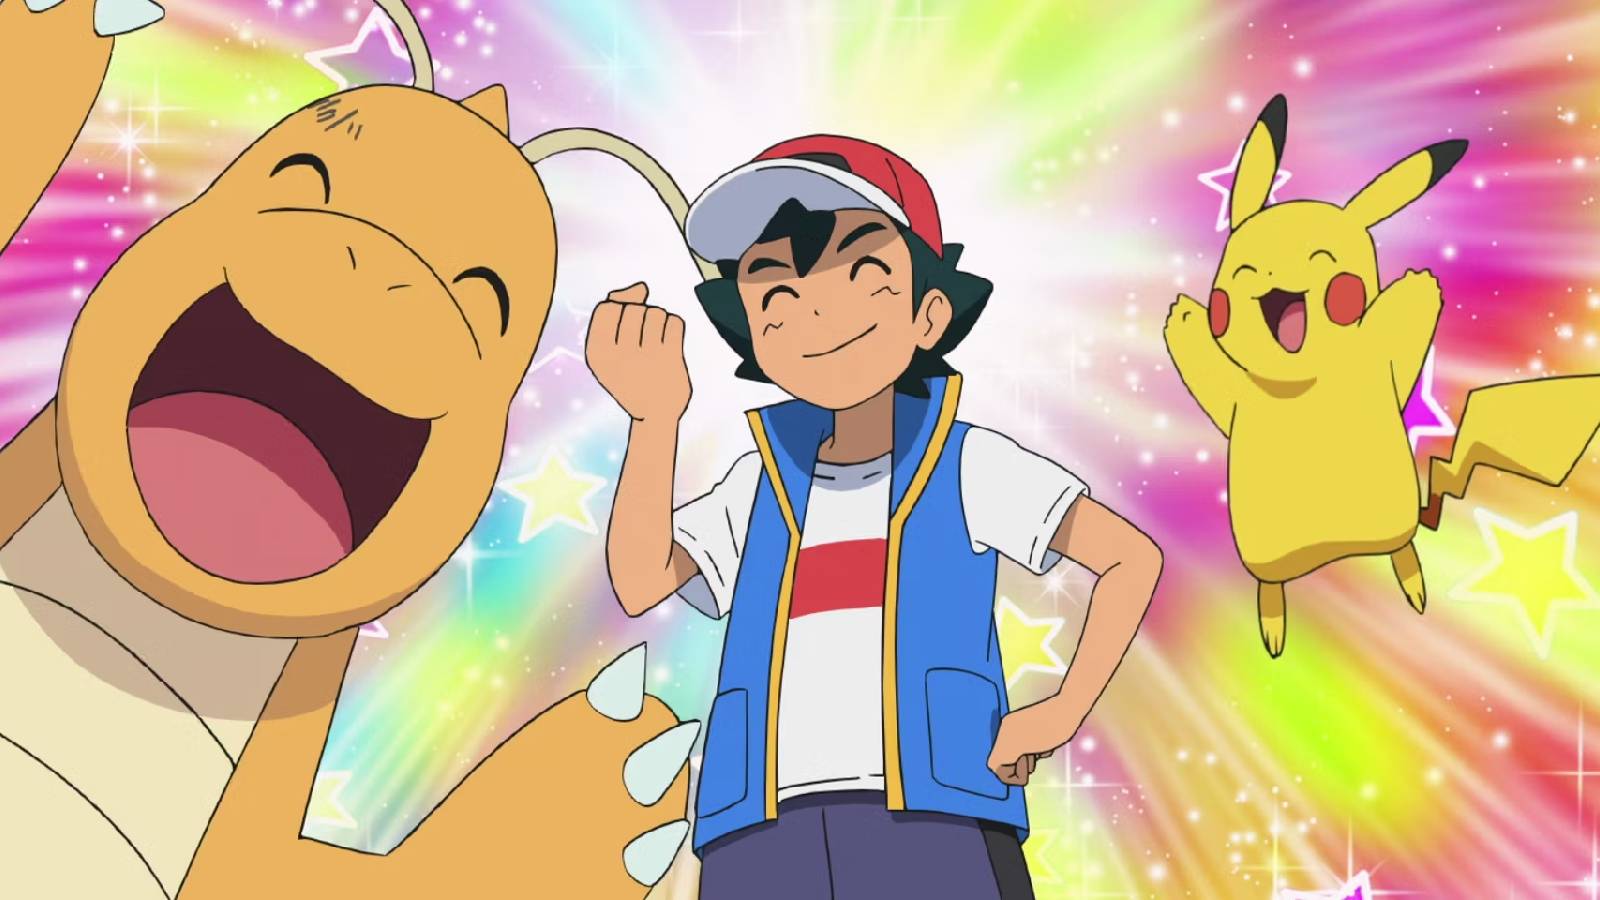 Ash Ketchum appears triumphant next to Pikachu and Dragonite